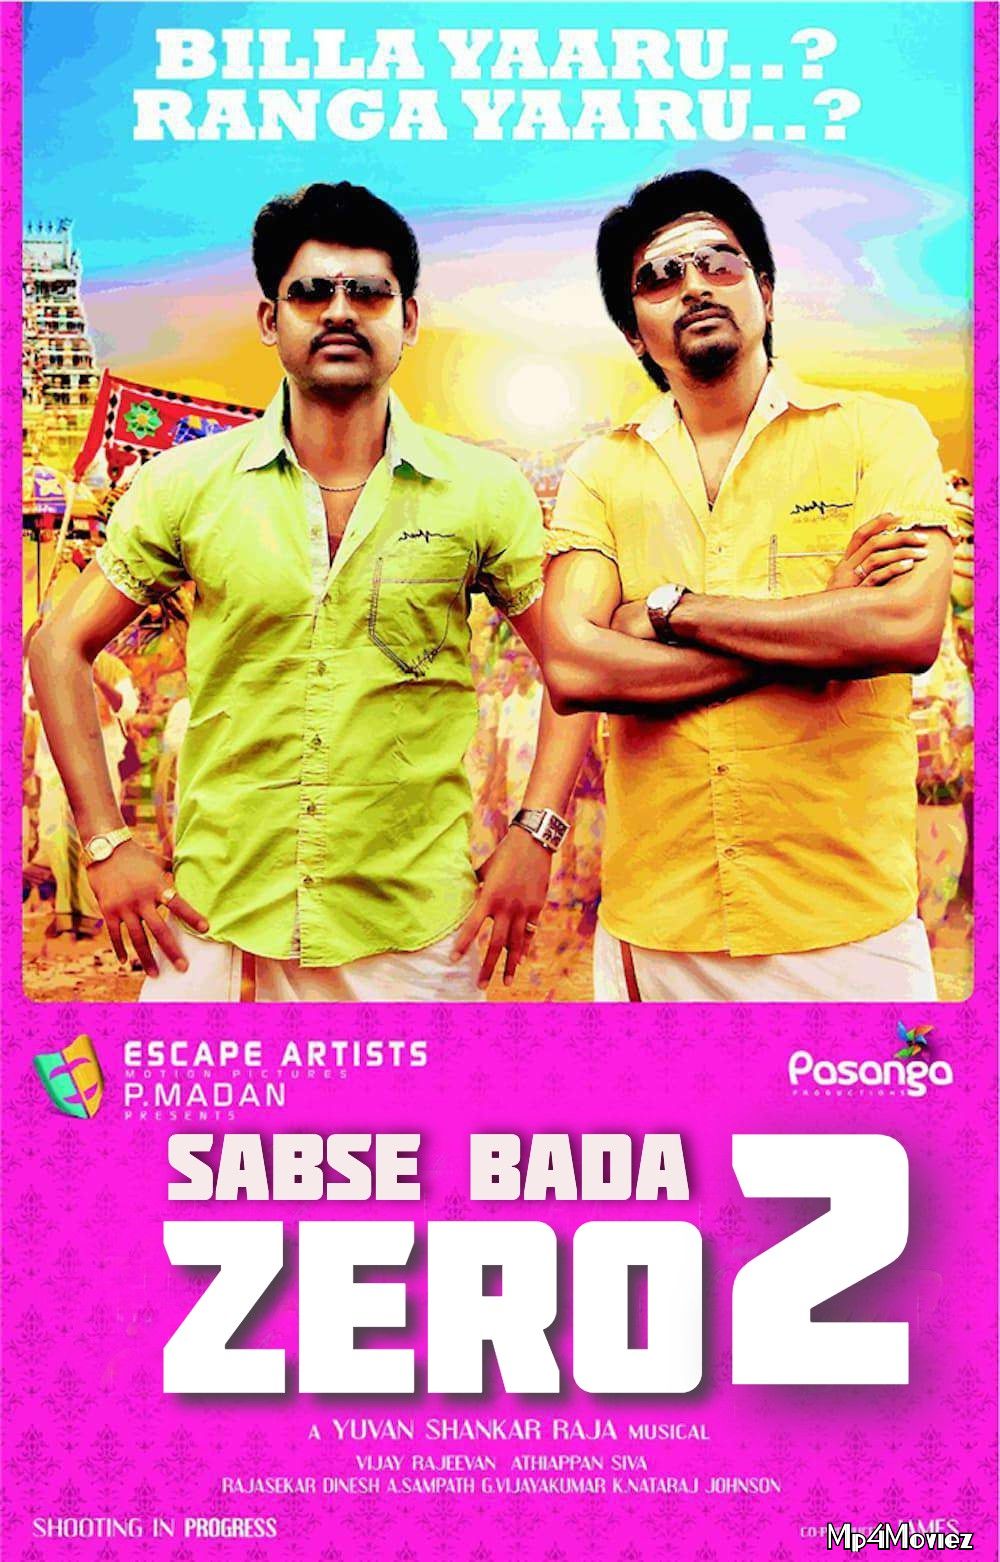 Sabse Bada Zero 2 (Kedi Billa Killadi Ranga) 2020 Hindi Dubbed Movie download full movie